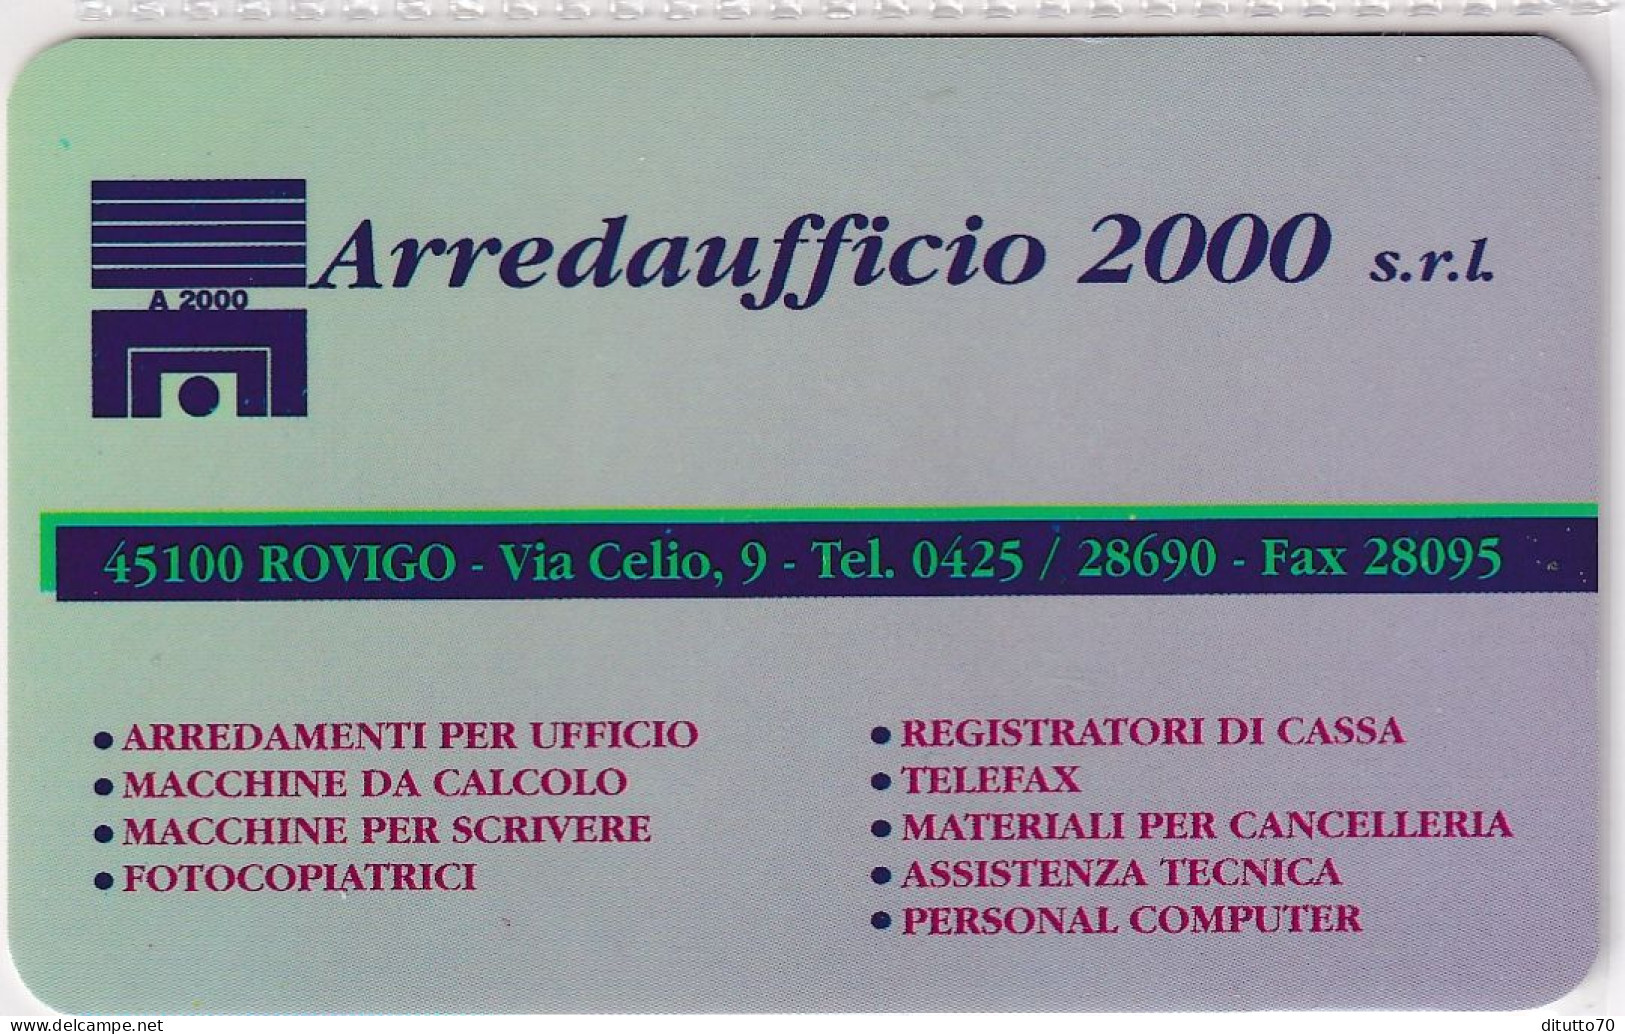 Calendarietto - Arredaufficio - Rovigo - Anno 1997 - Klein Formaat: 1991-00